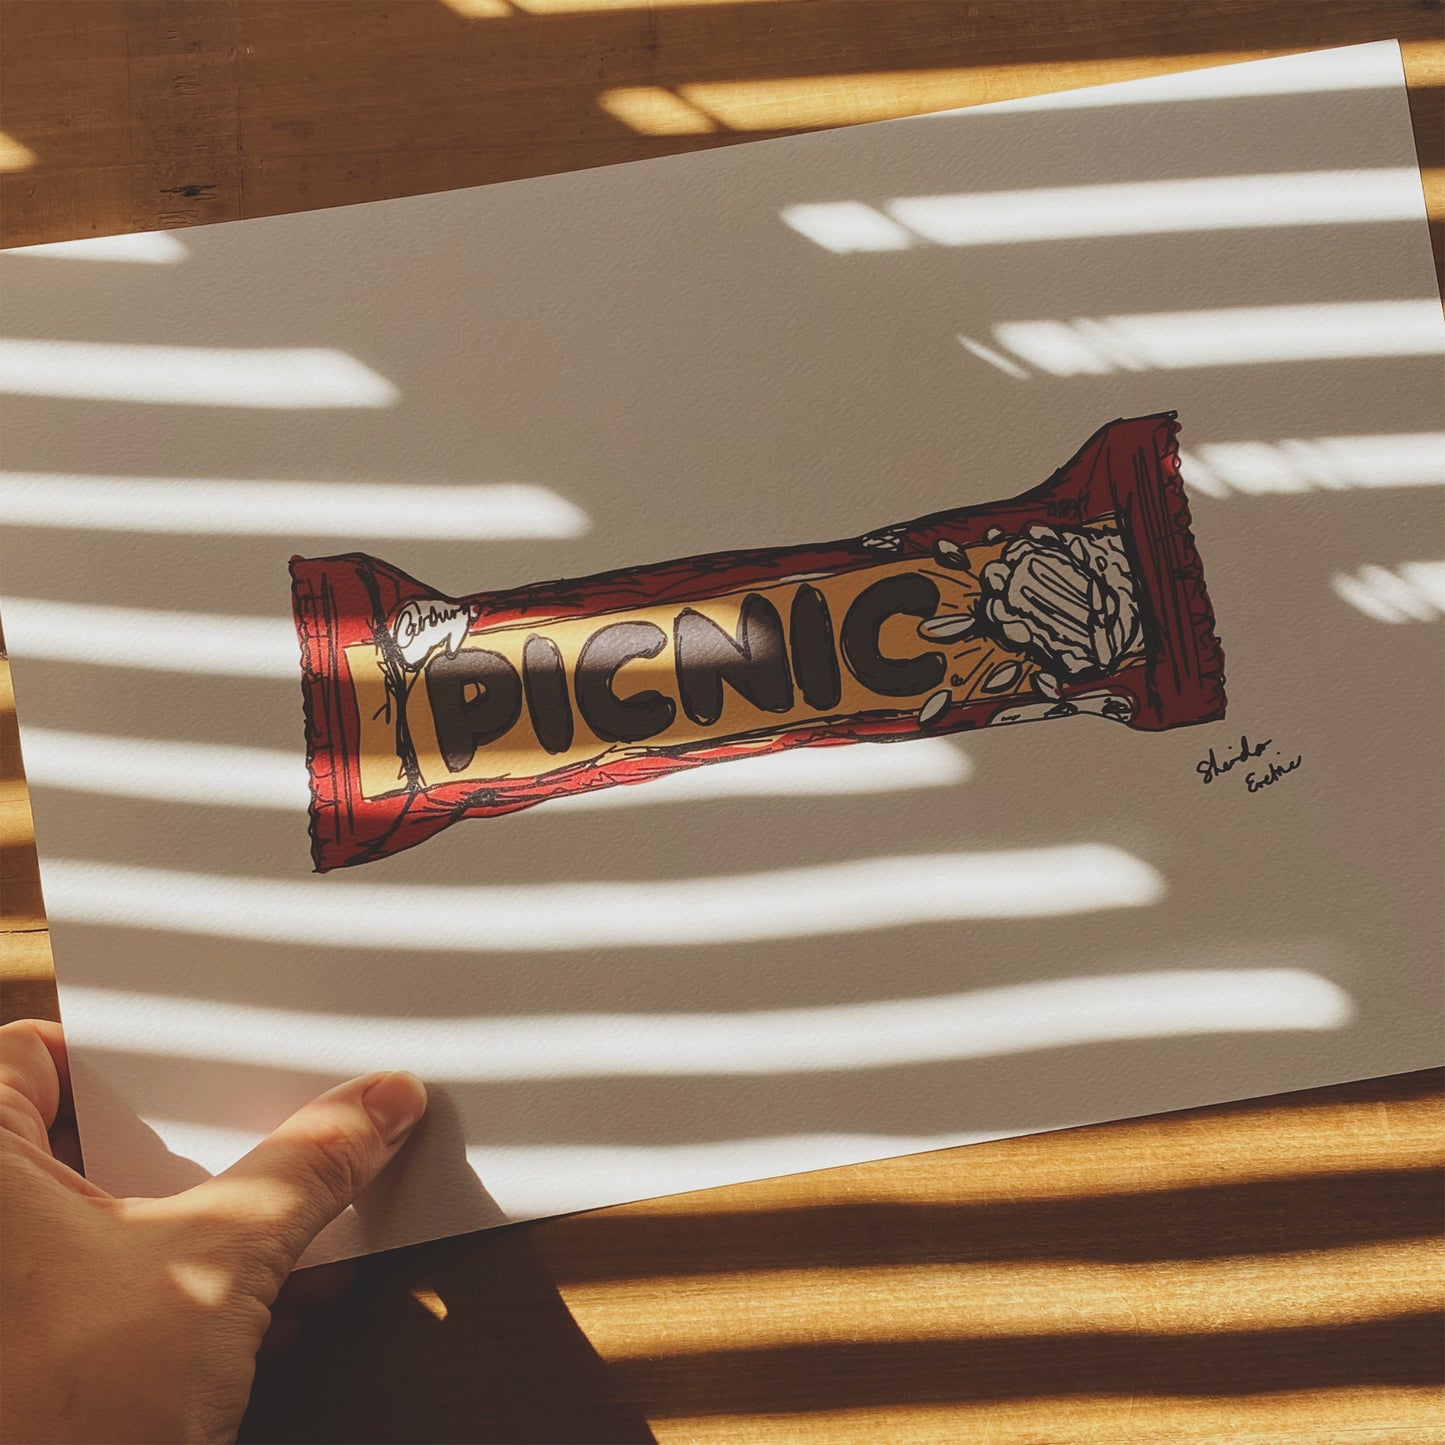 *SALE* Chocolate Picnic bar - Print